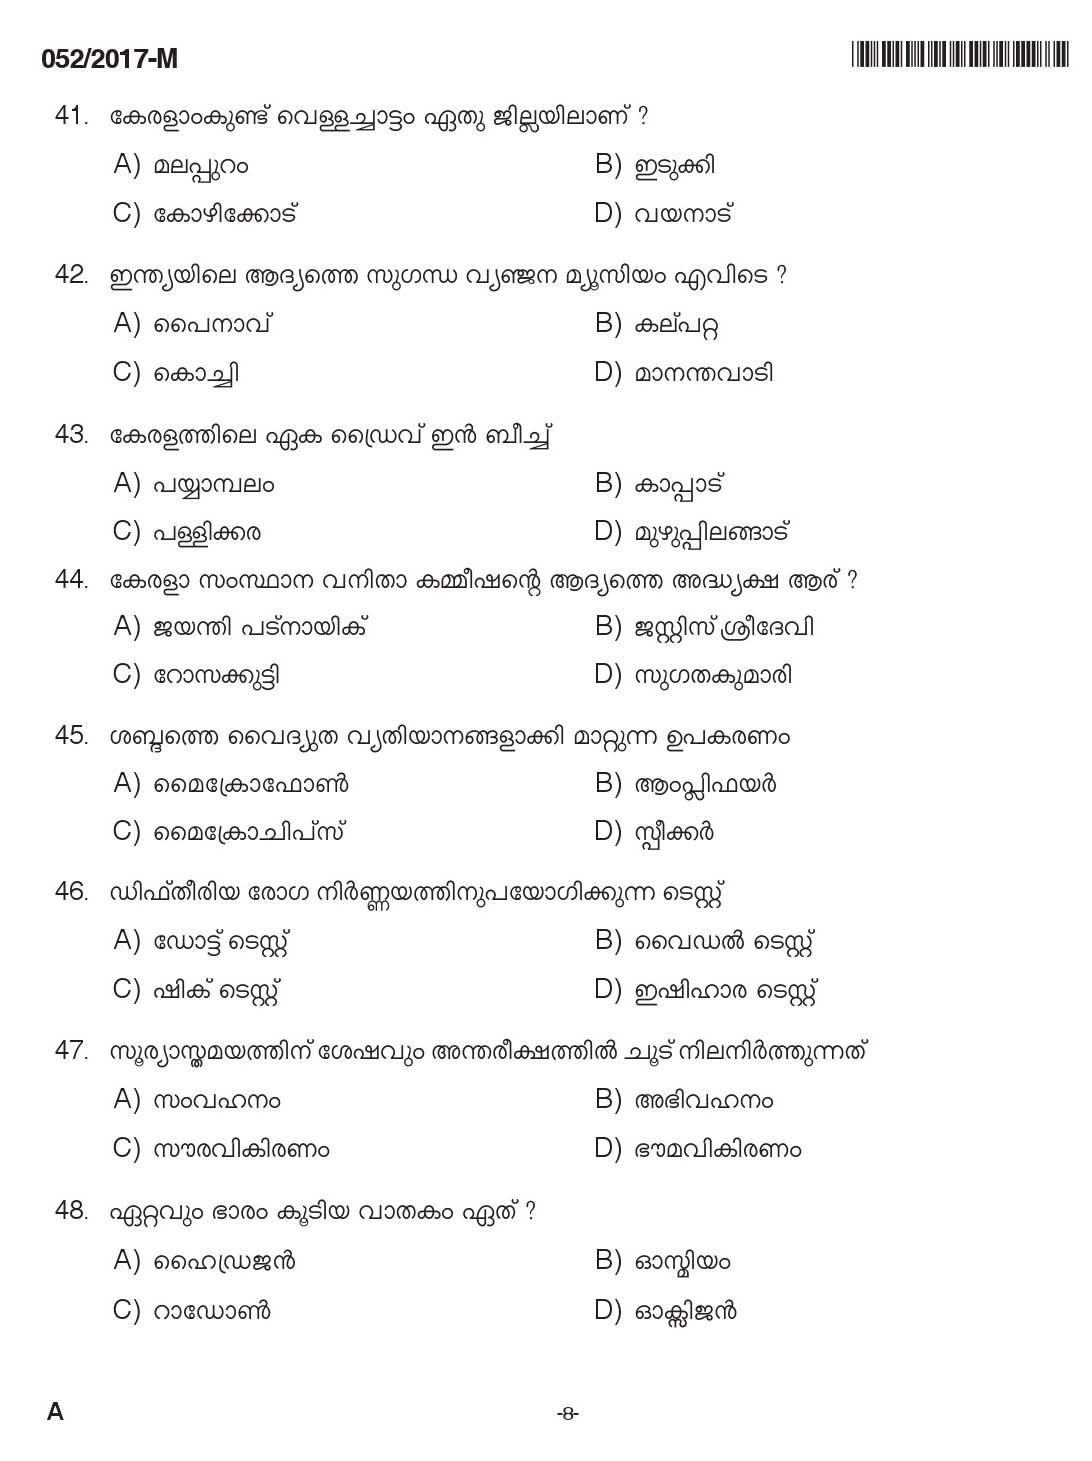 Kerala PSC Women Police Constable Exam Question Code 0522017 M 7